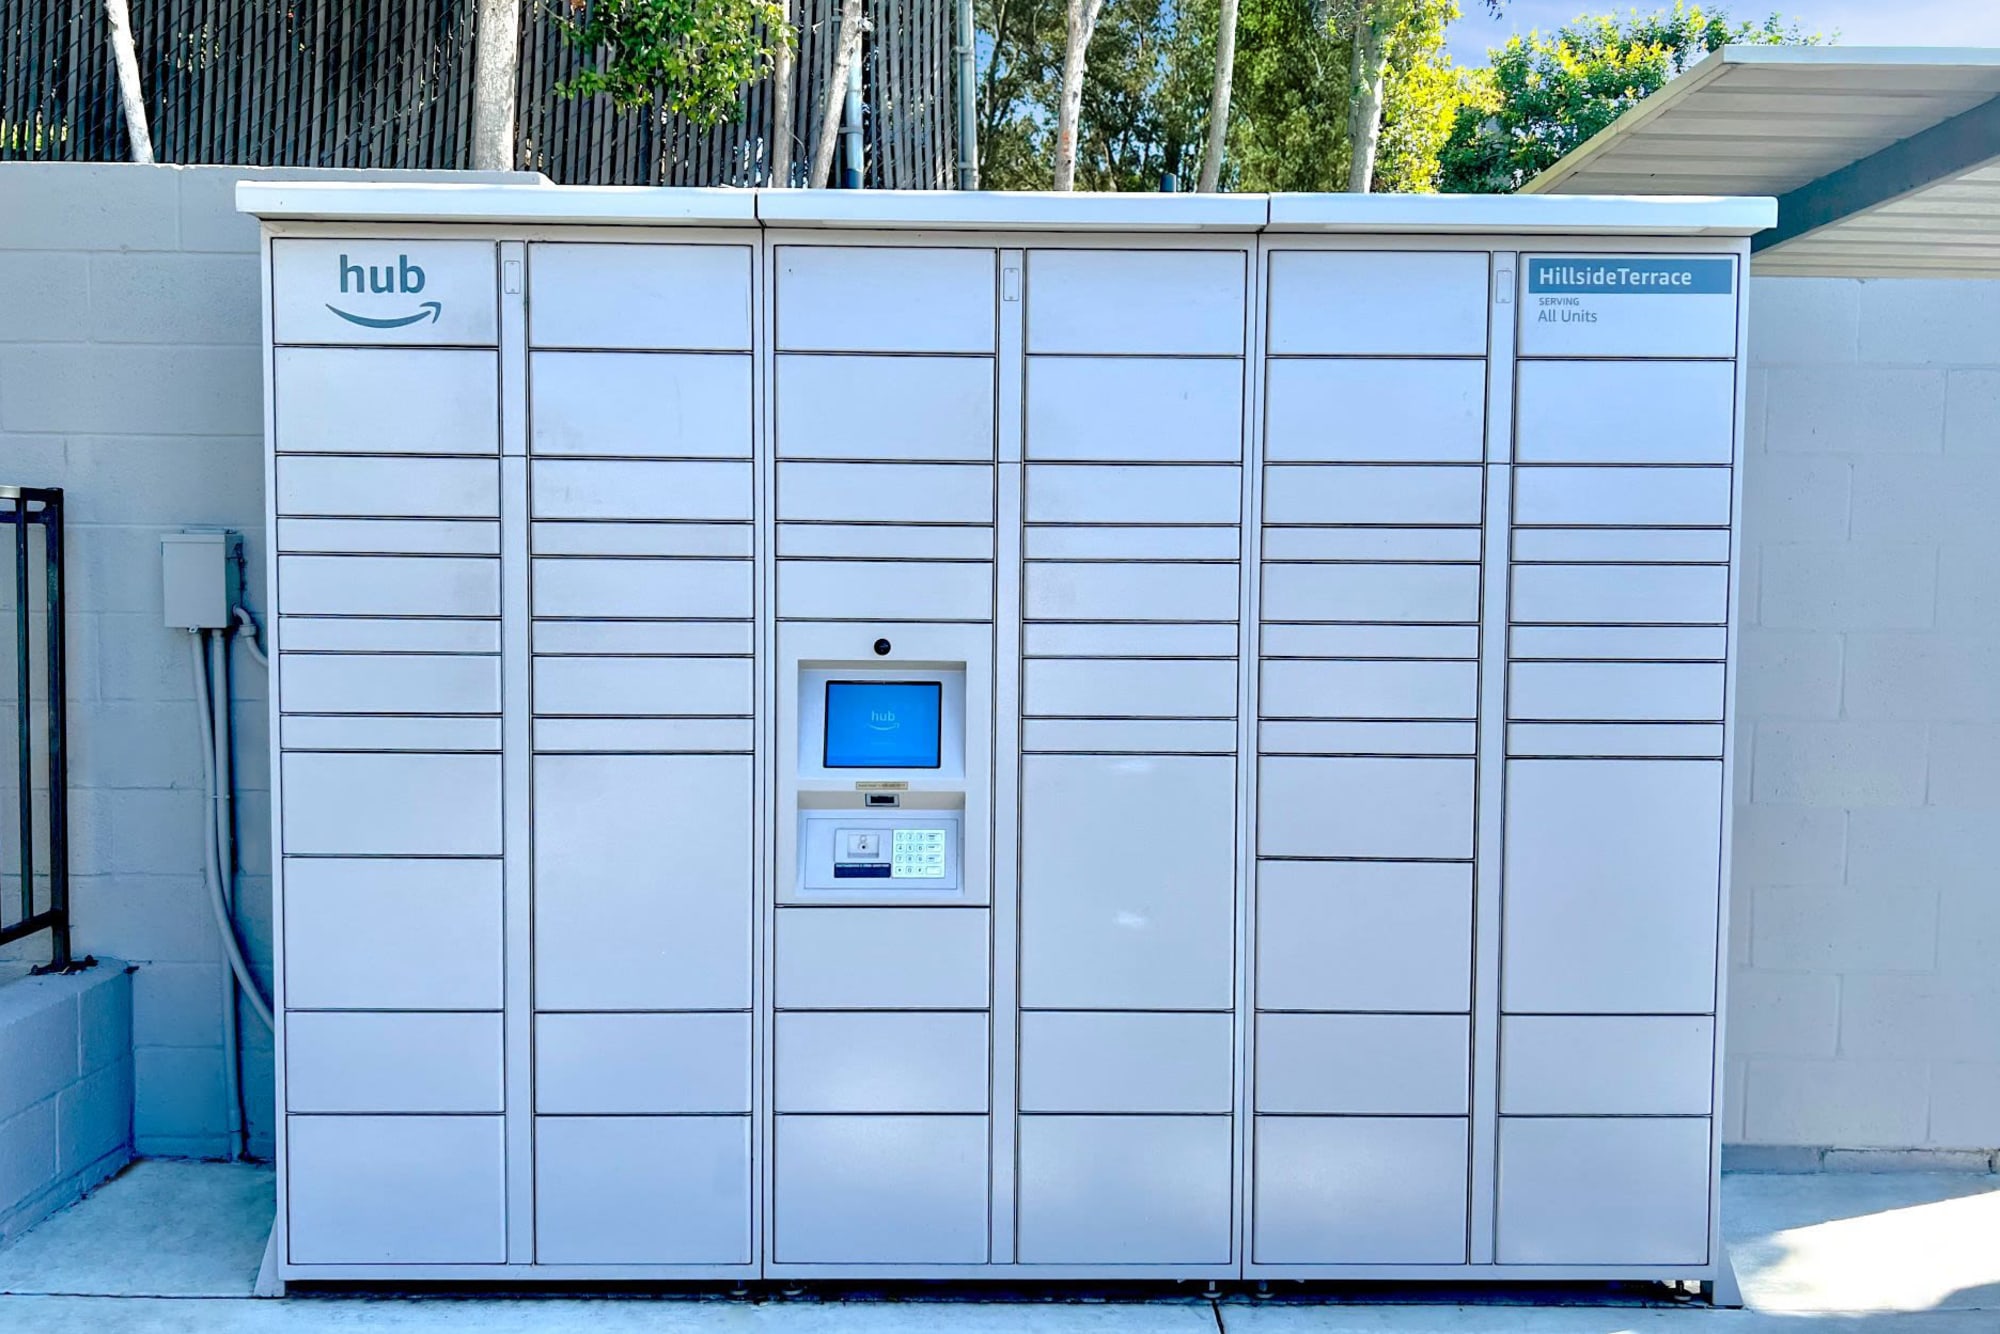 24-hour package lockers at Hillside Terrace Apartments in Lemon Grove, California